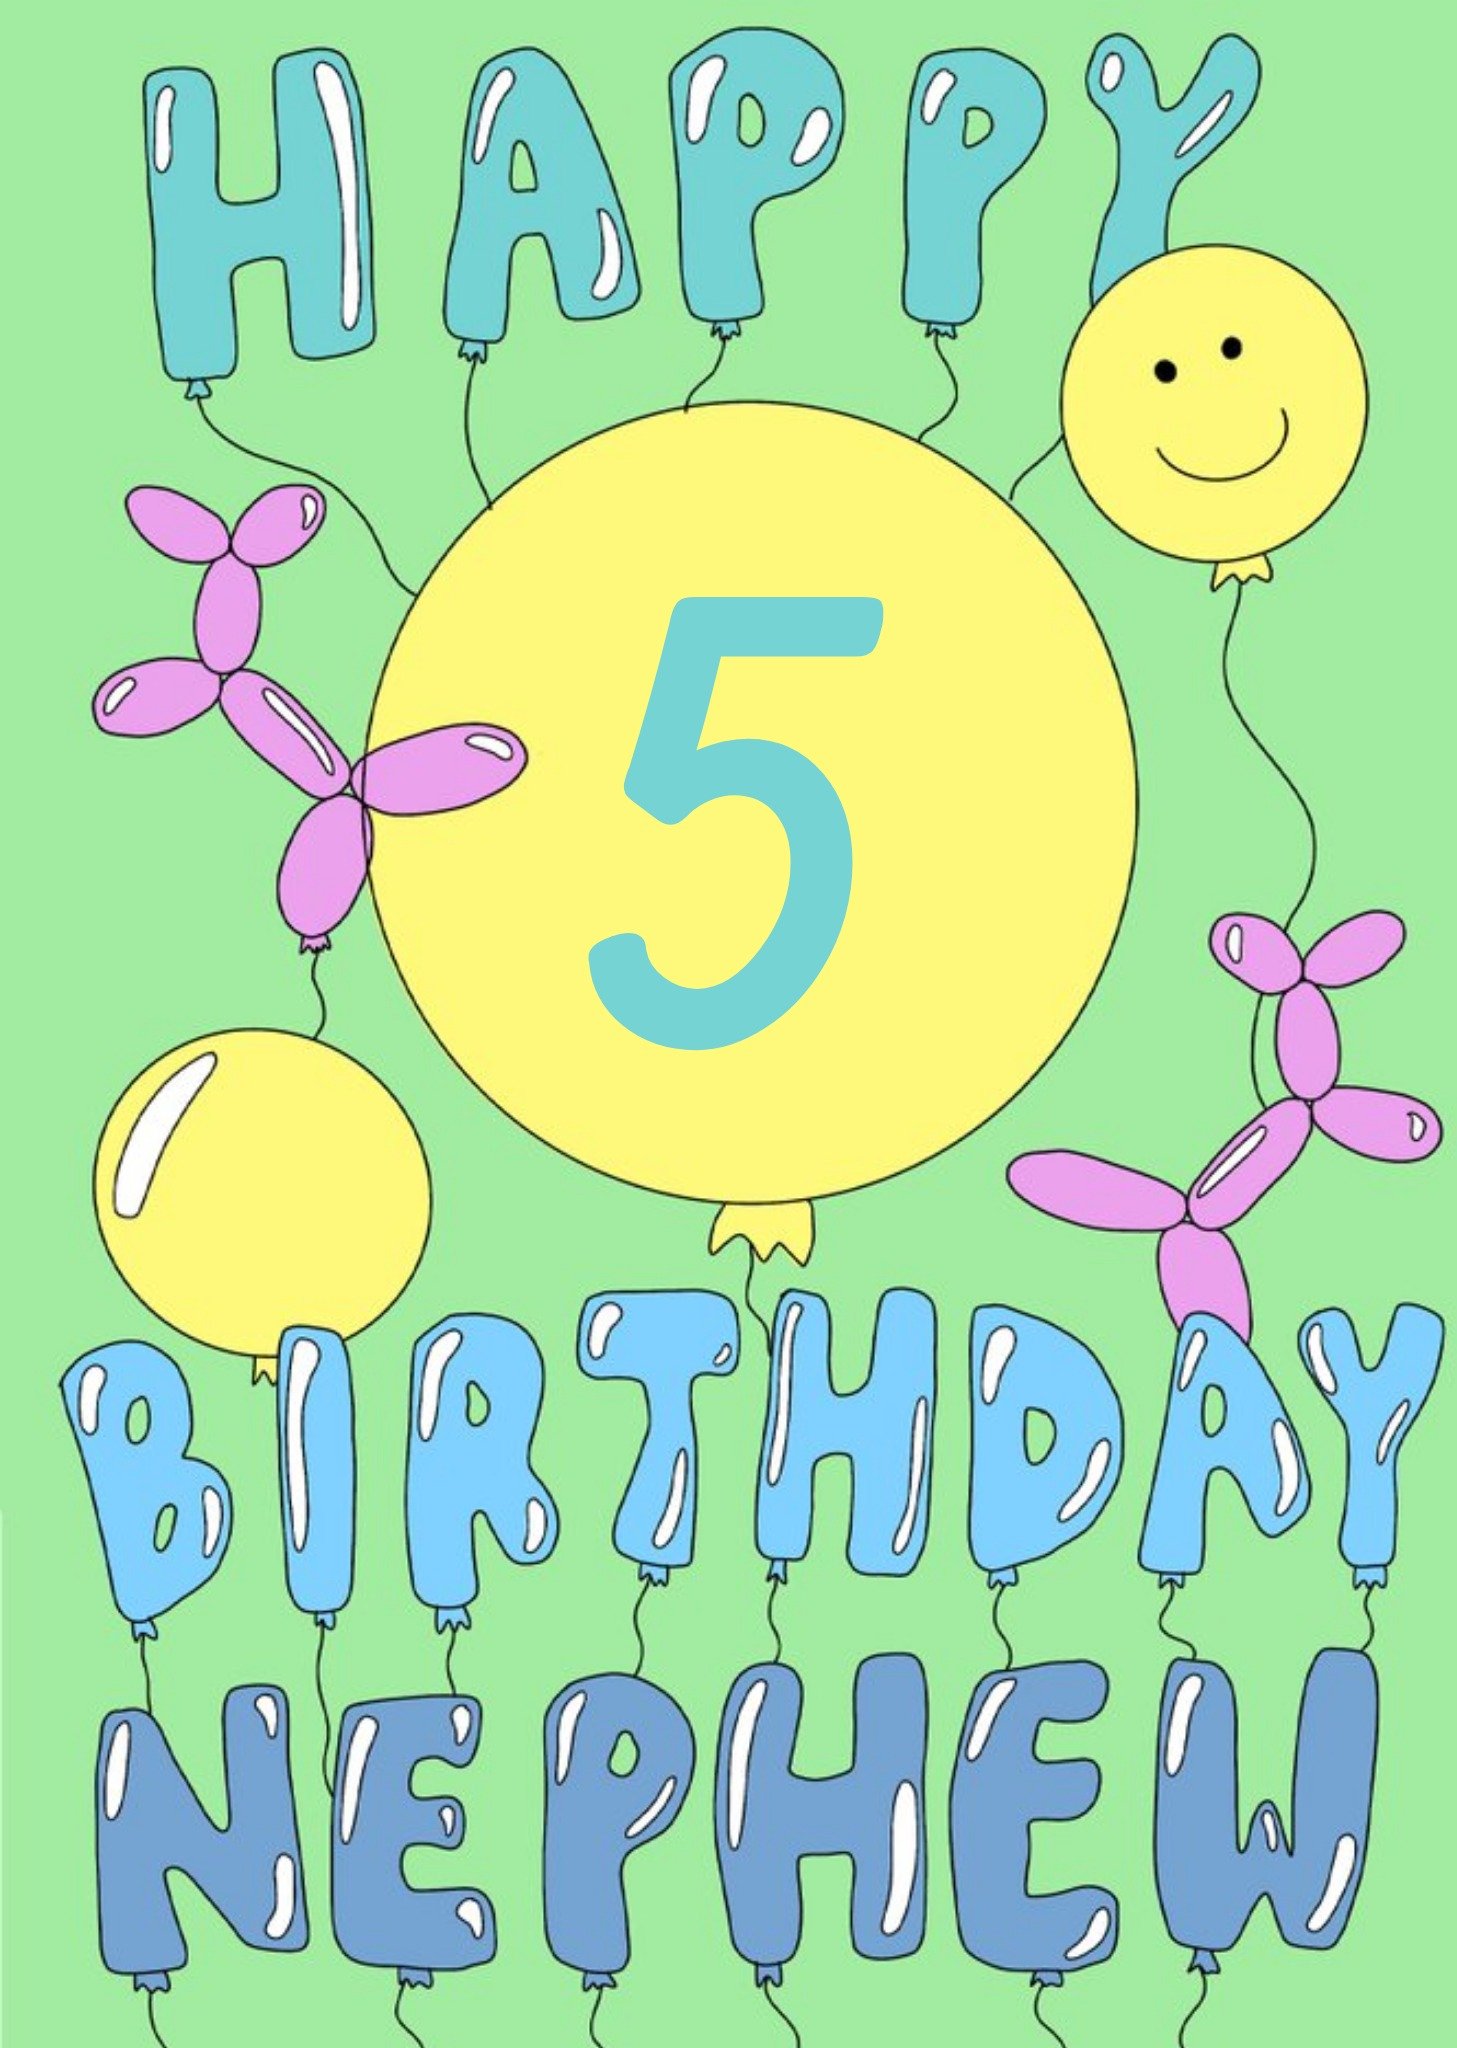 Moonpig Aleisha Earp Green Illustrated Balloons Nephew Personalised Birthday Card, Large